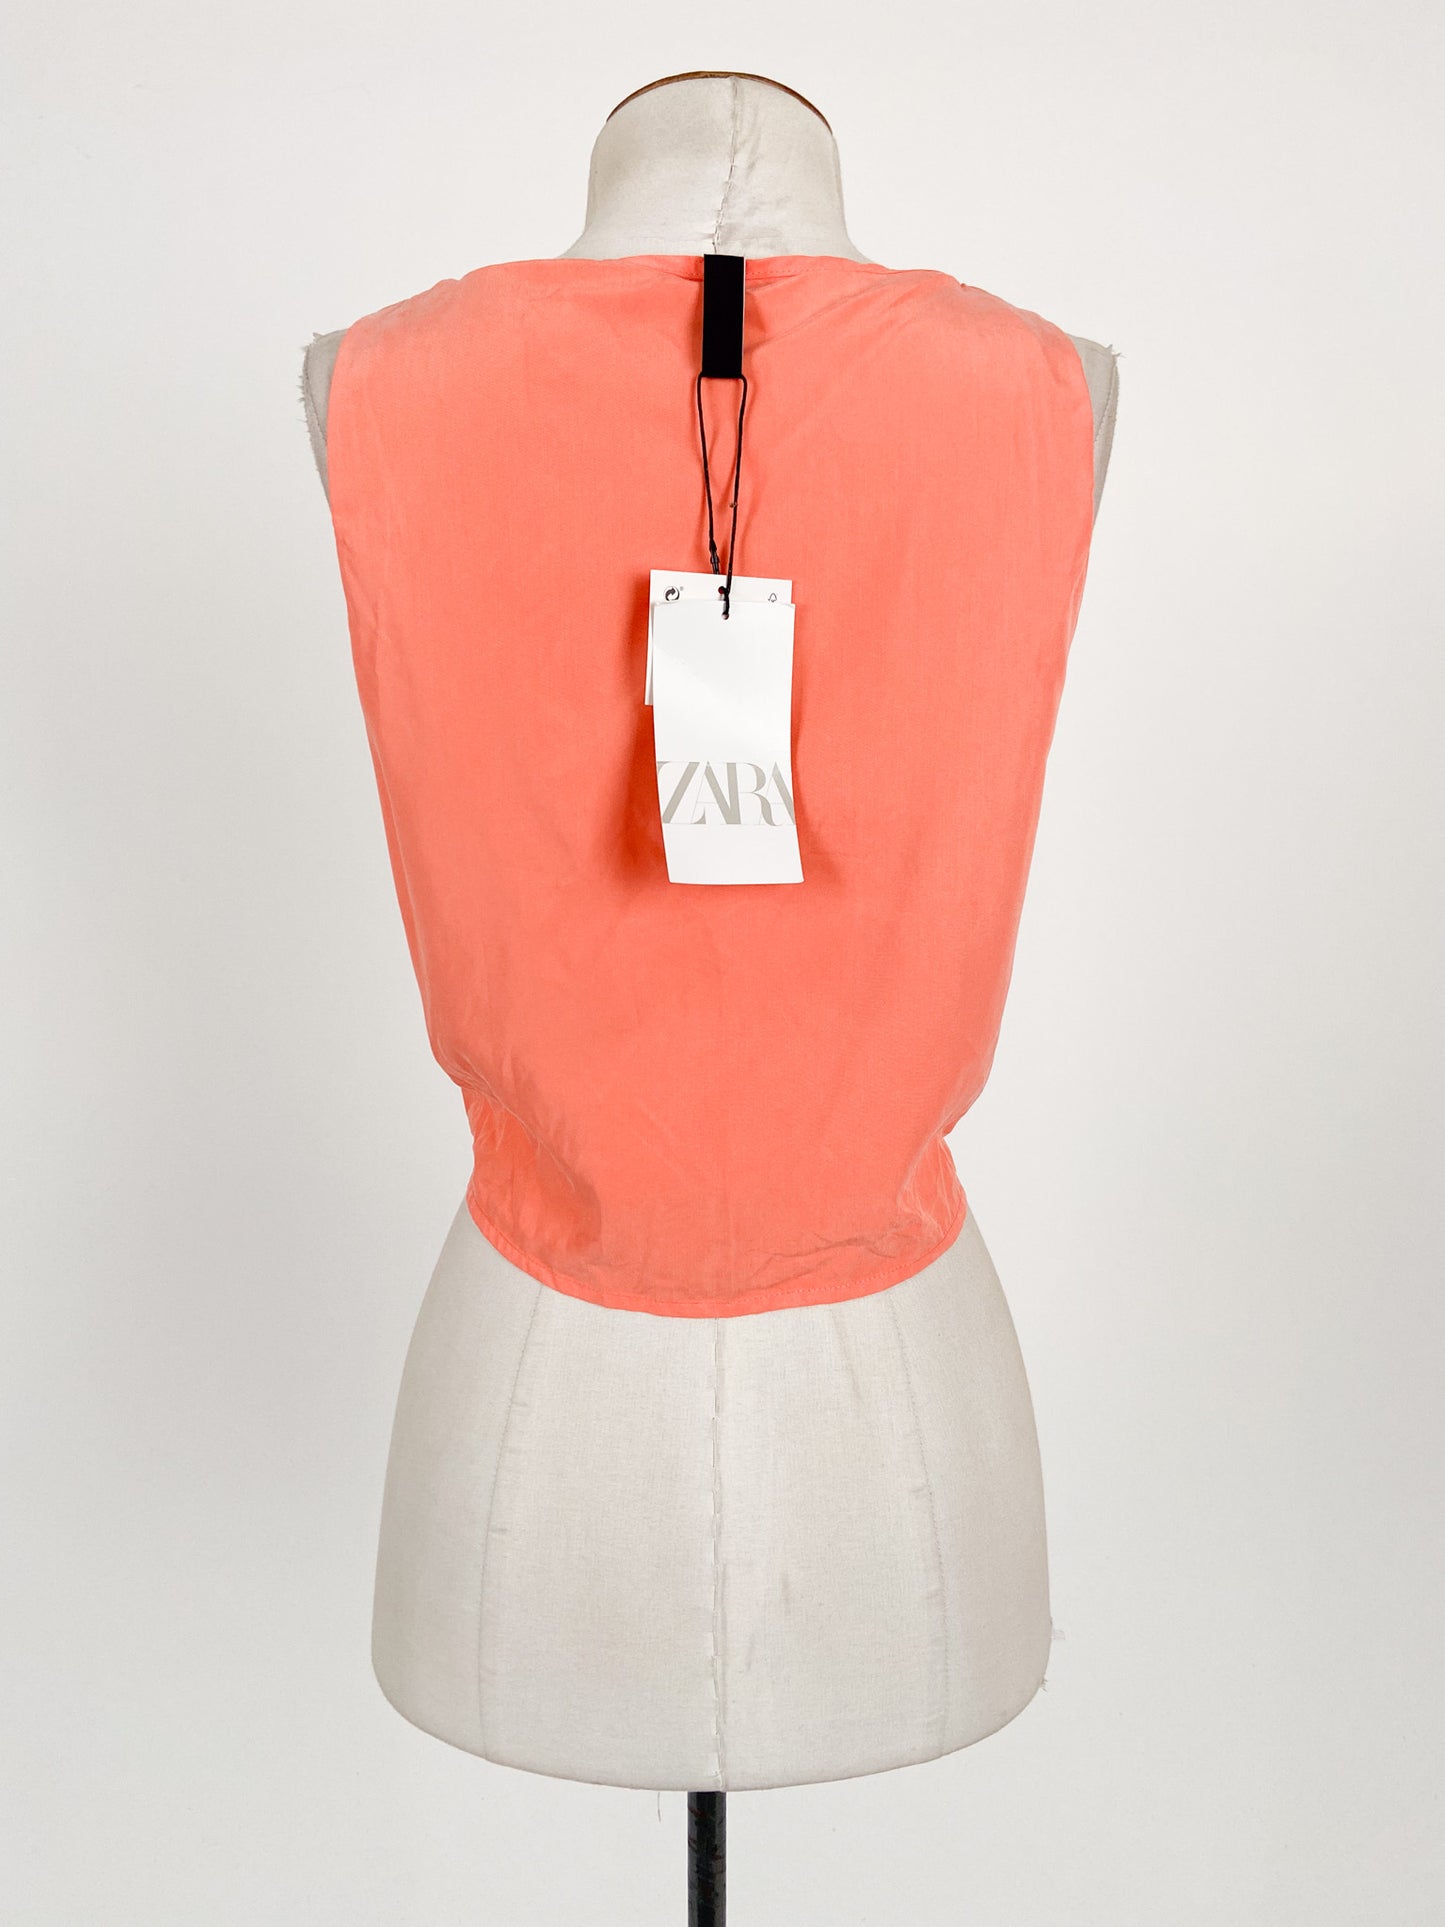 Zara | Orange Casual Top | Size S